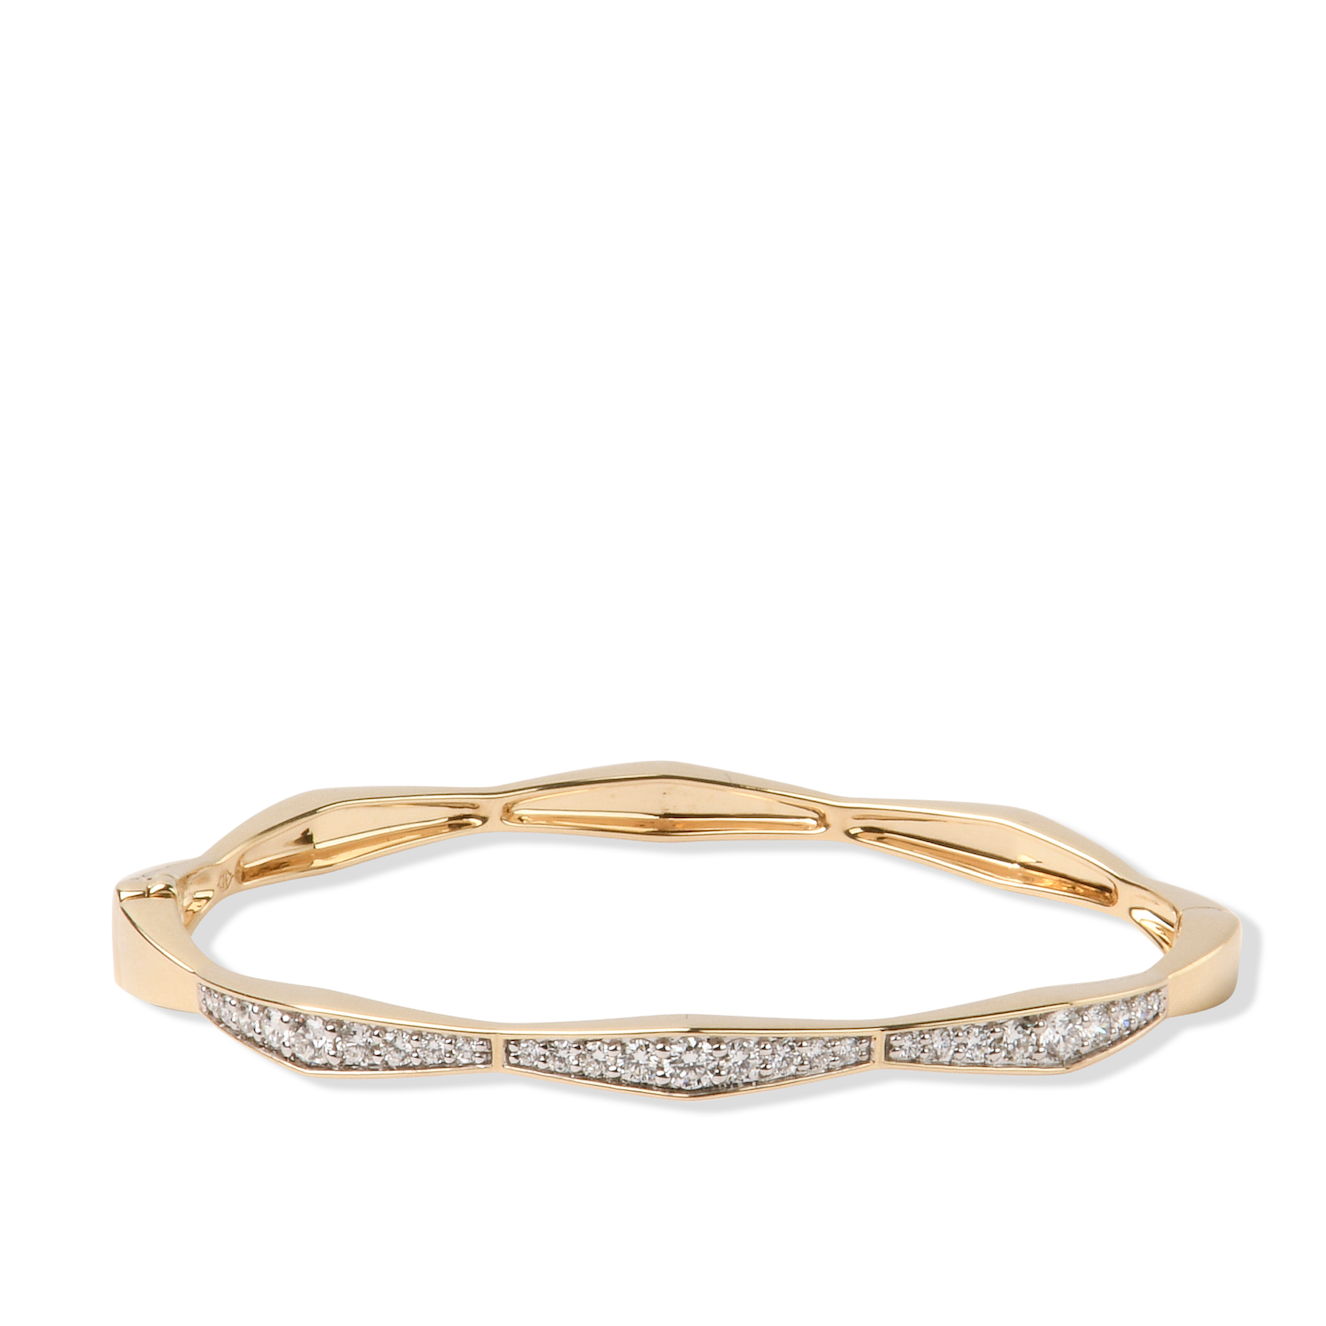 Solid Gold Natural White Diamond Stack Bangle Bracelet